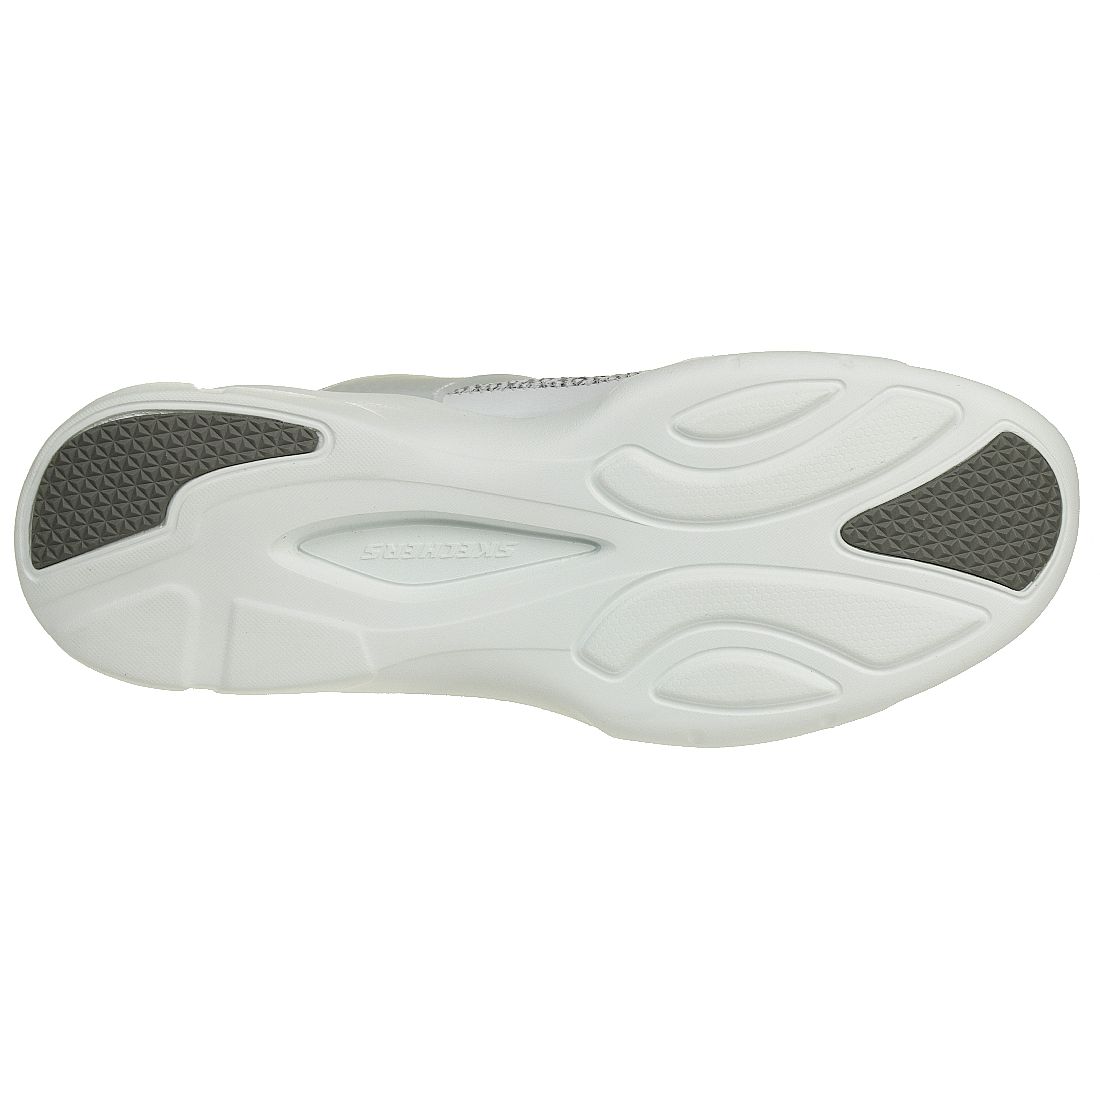 Skechers D'Lites  DLT-A Herren Air Cooled Memory Foam Sneaker Sportschuhe Trainer weiss grau